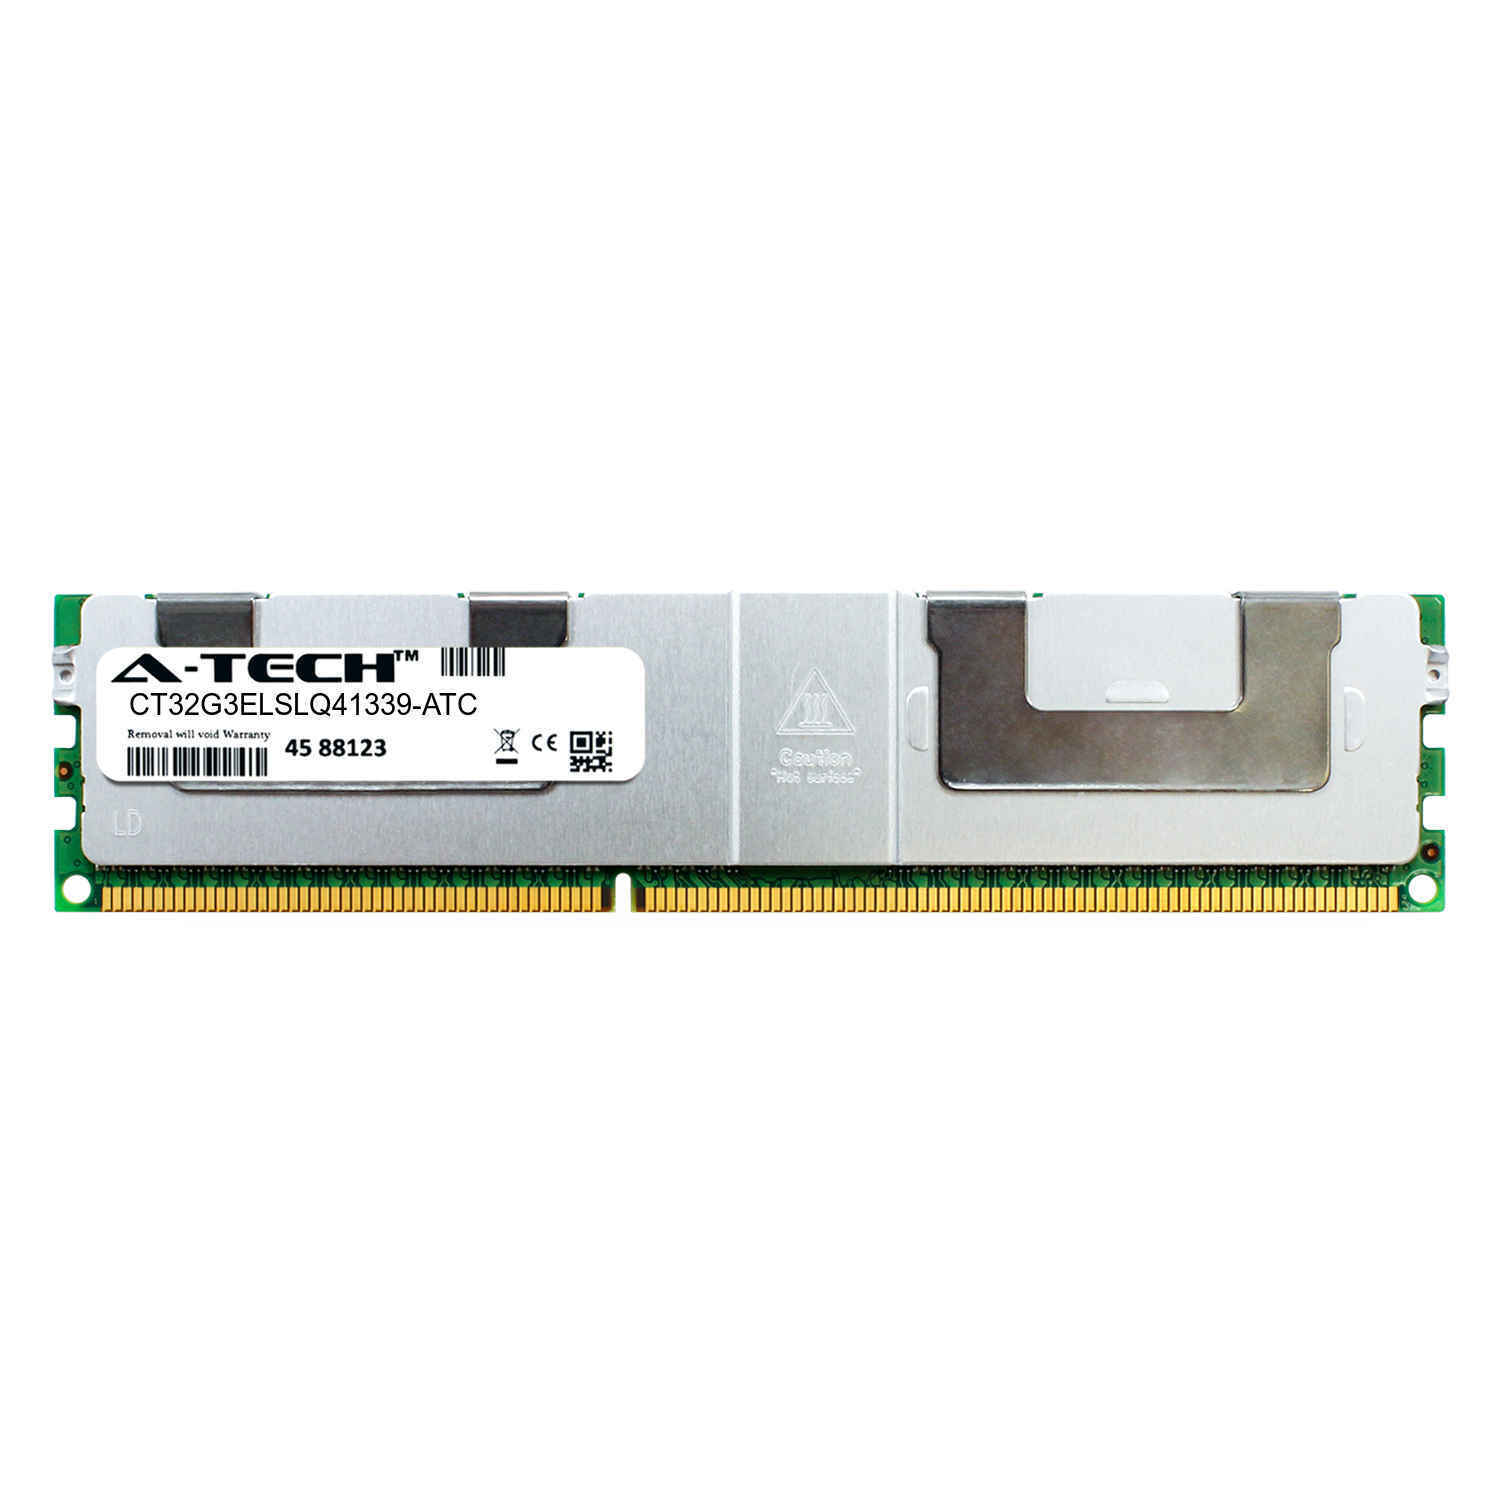 32GB PC3-10600L LRDIMM (Crucial CT32G3ELSLQ41339 Equivalent) Server Memory RAM